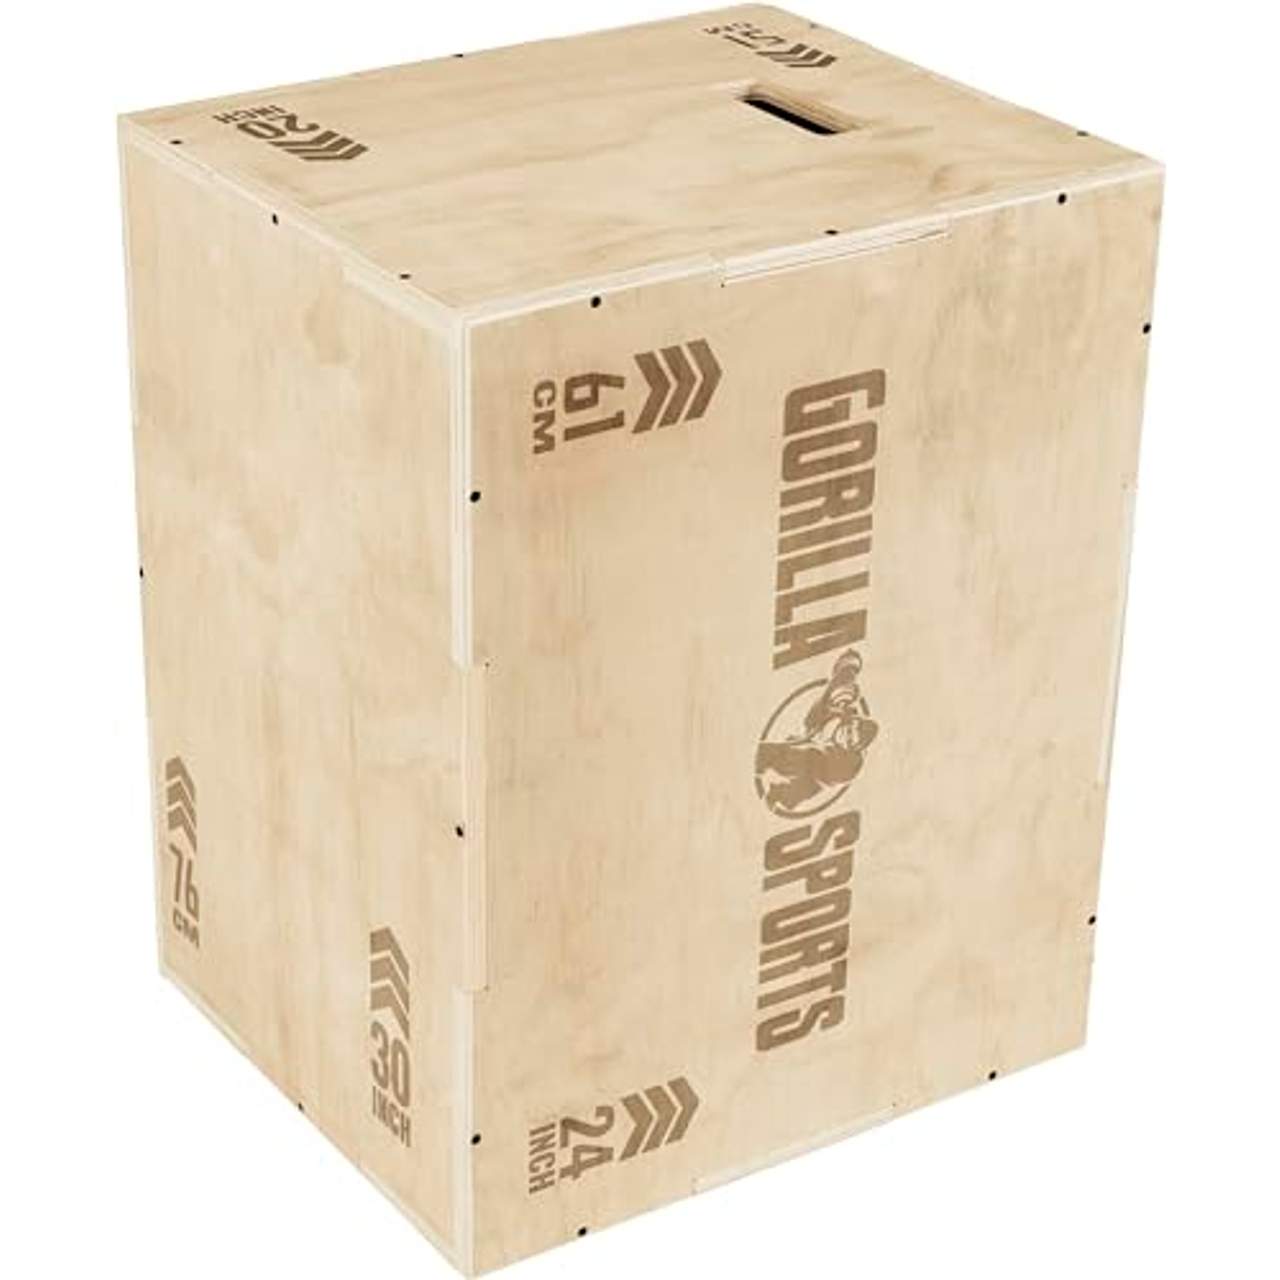 GORILLA SPORTS Plyo-Box Holz 60 x 50,5 x 75,5 cm